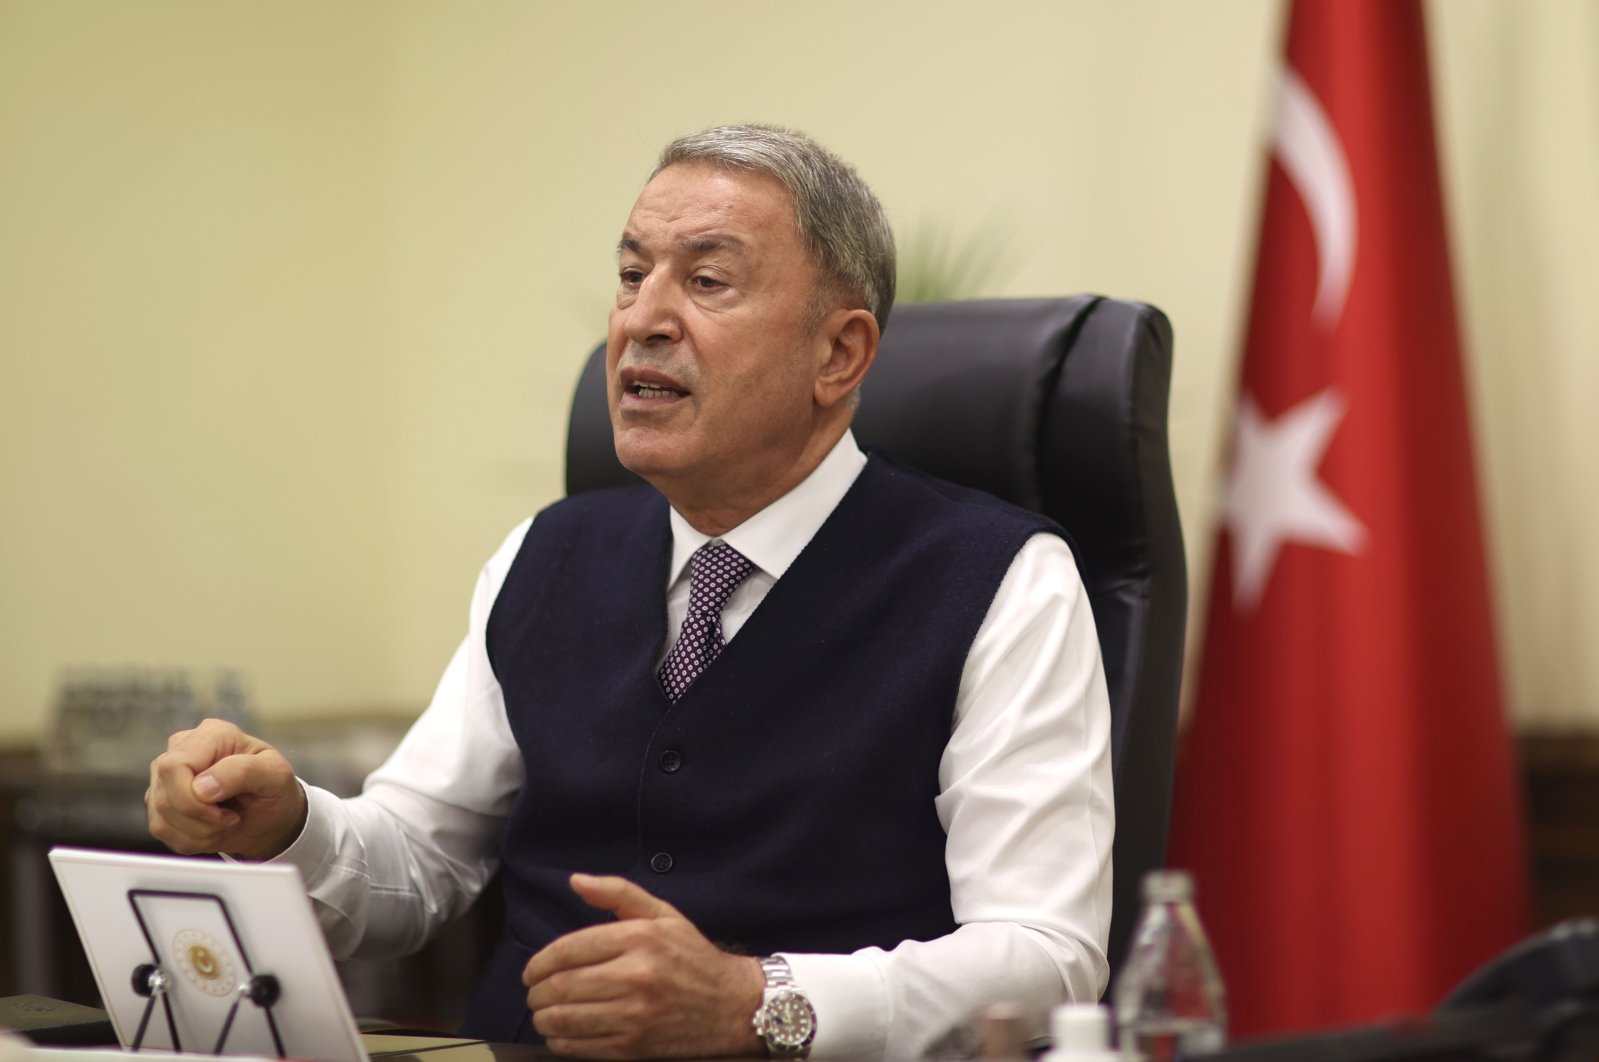 Defense Minister Hulusi Akar speaks in a virtual year-end evaluation meeting in the capital Ankara, Turkey, Dec. 29, 2020. (AA Photo)